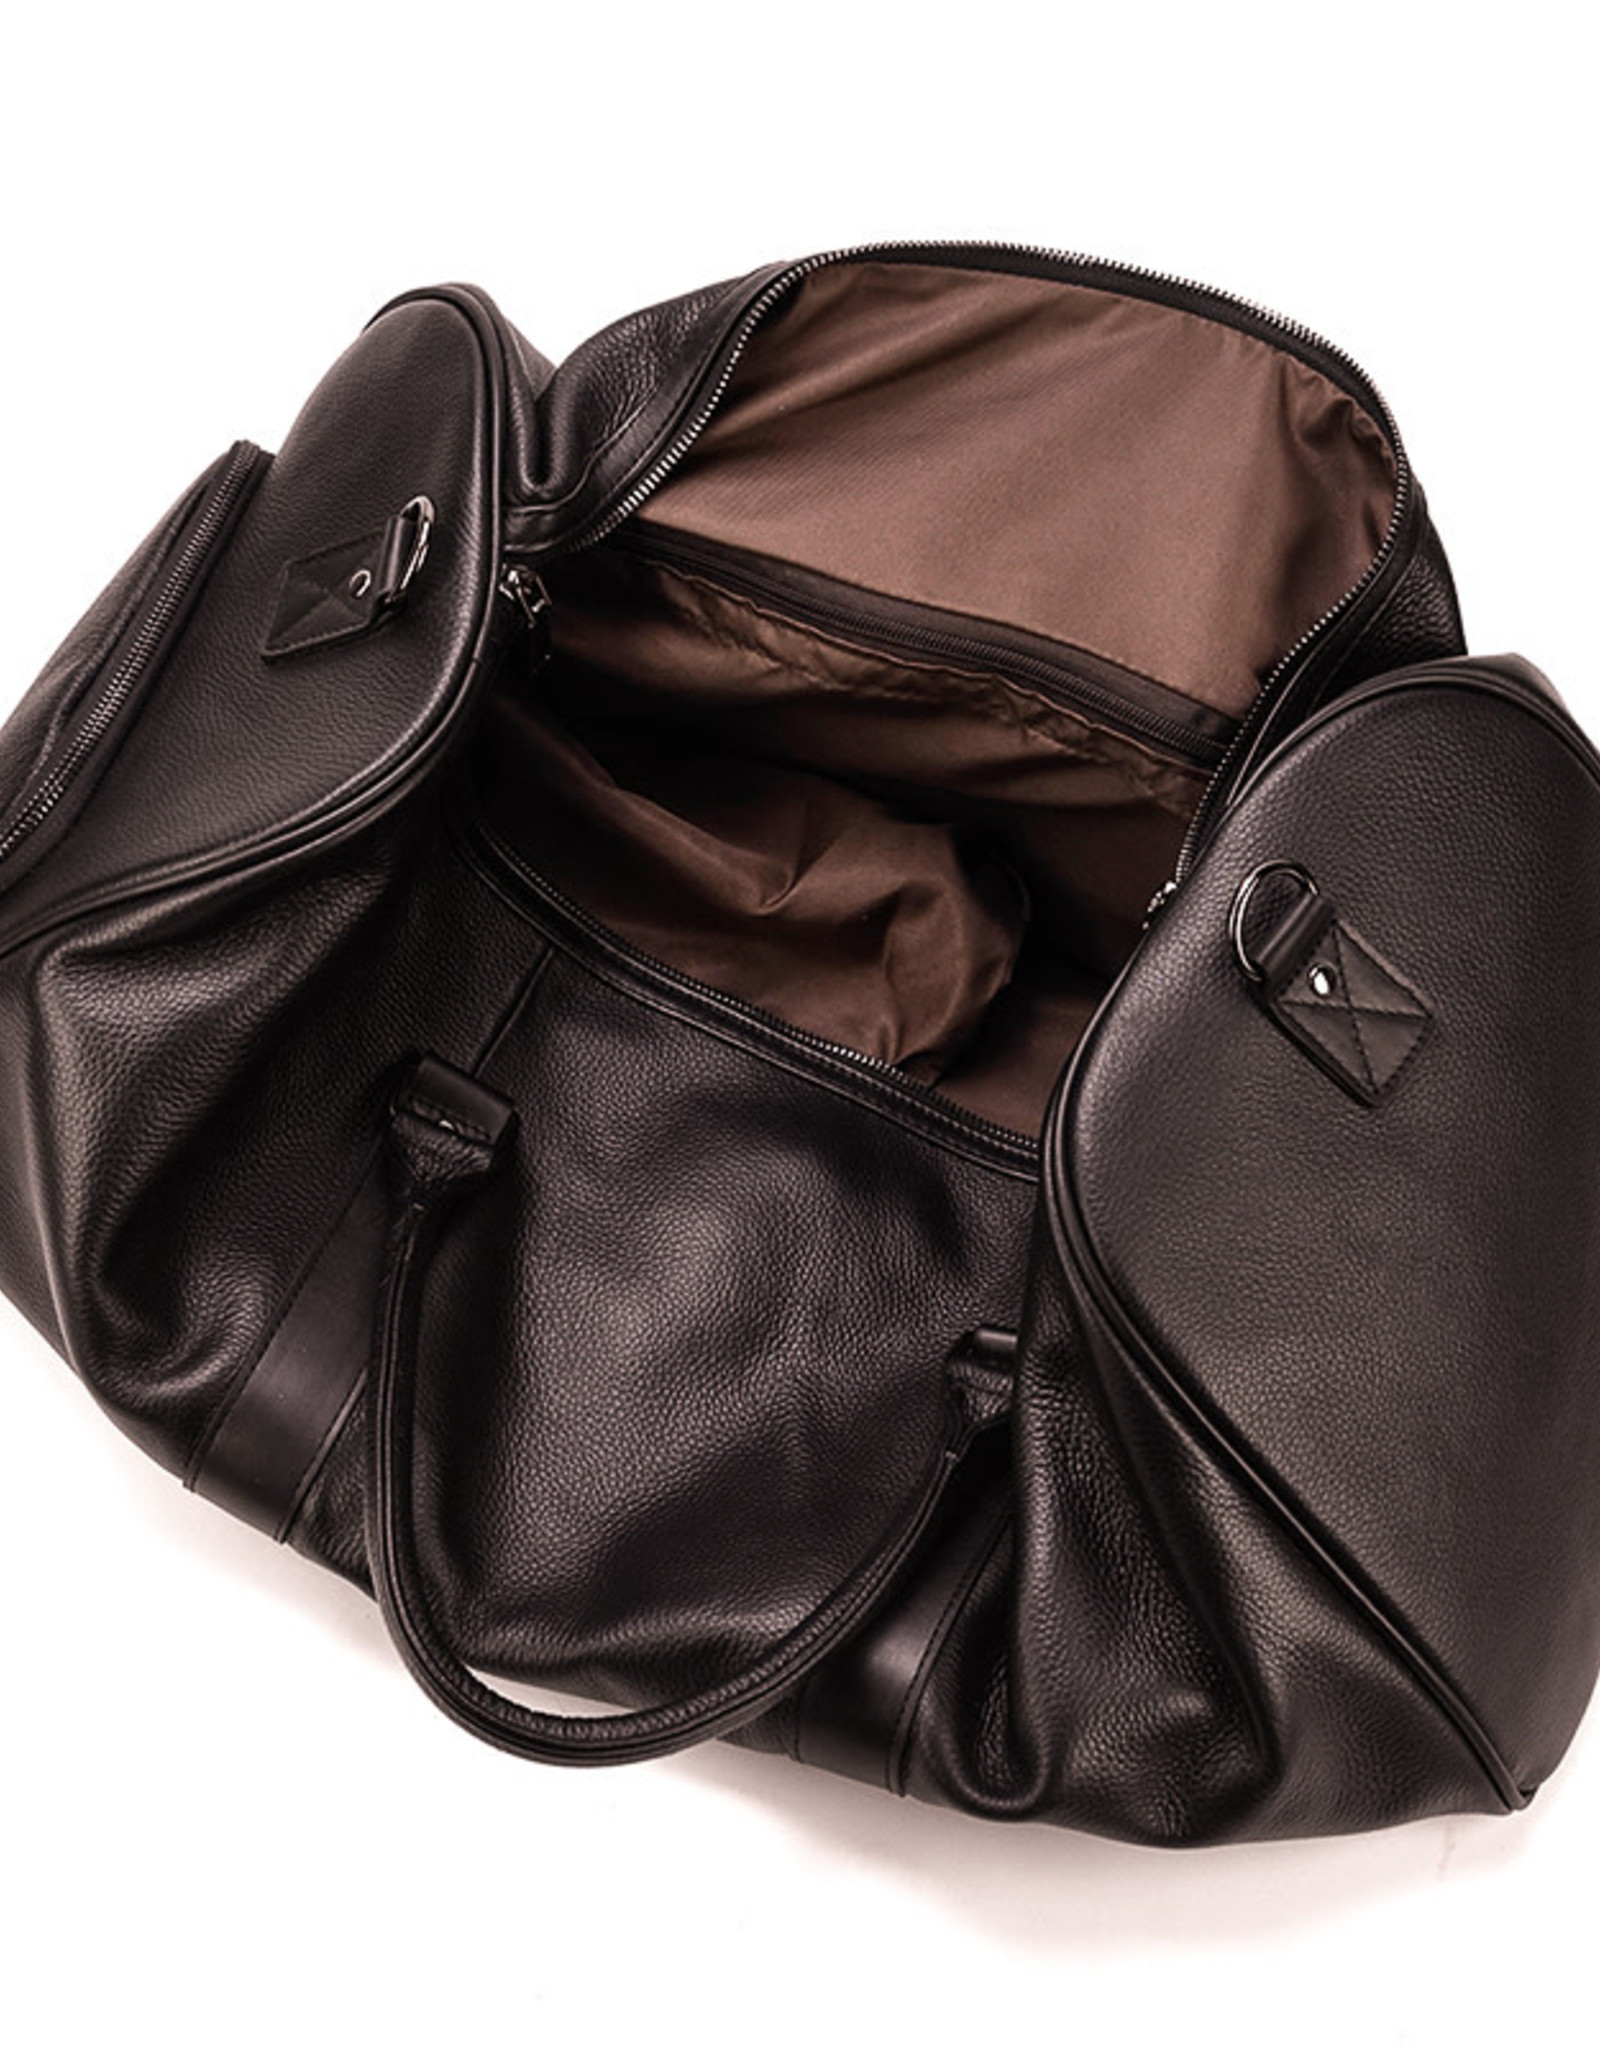 Jordan Travel Luggage Bag Genuine Leather